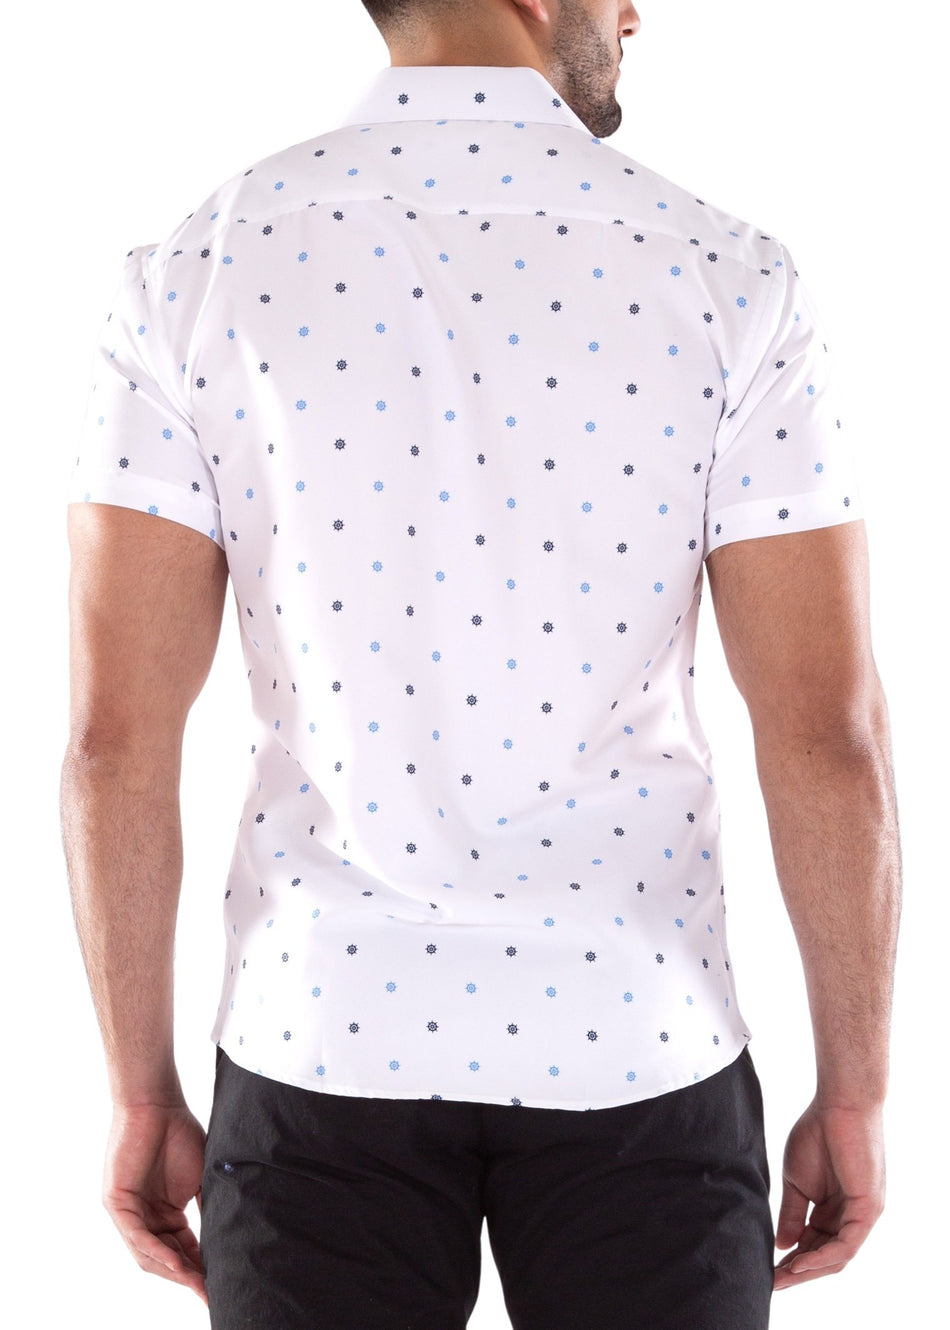 222052 - White Button Up Short Sleeve Shirt